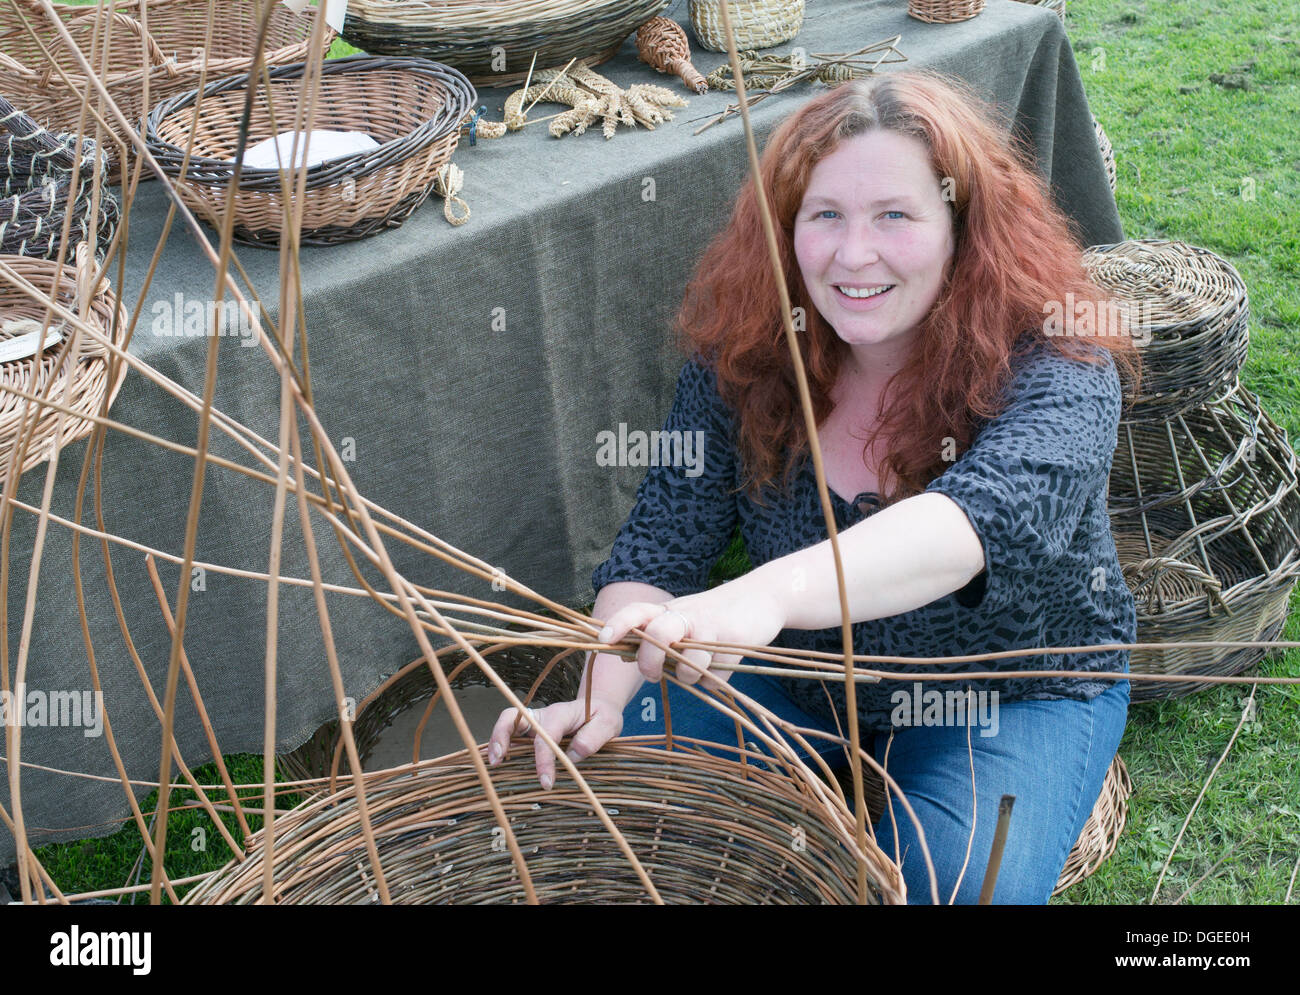 Woman demonstrating basket weaving at Washington Heritage and Community Festival. north east England, UK Stock Photo